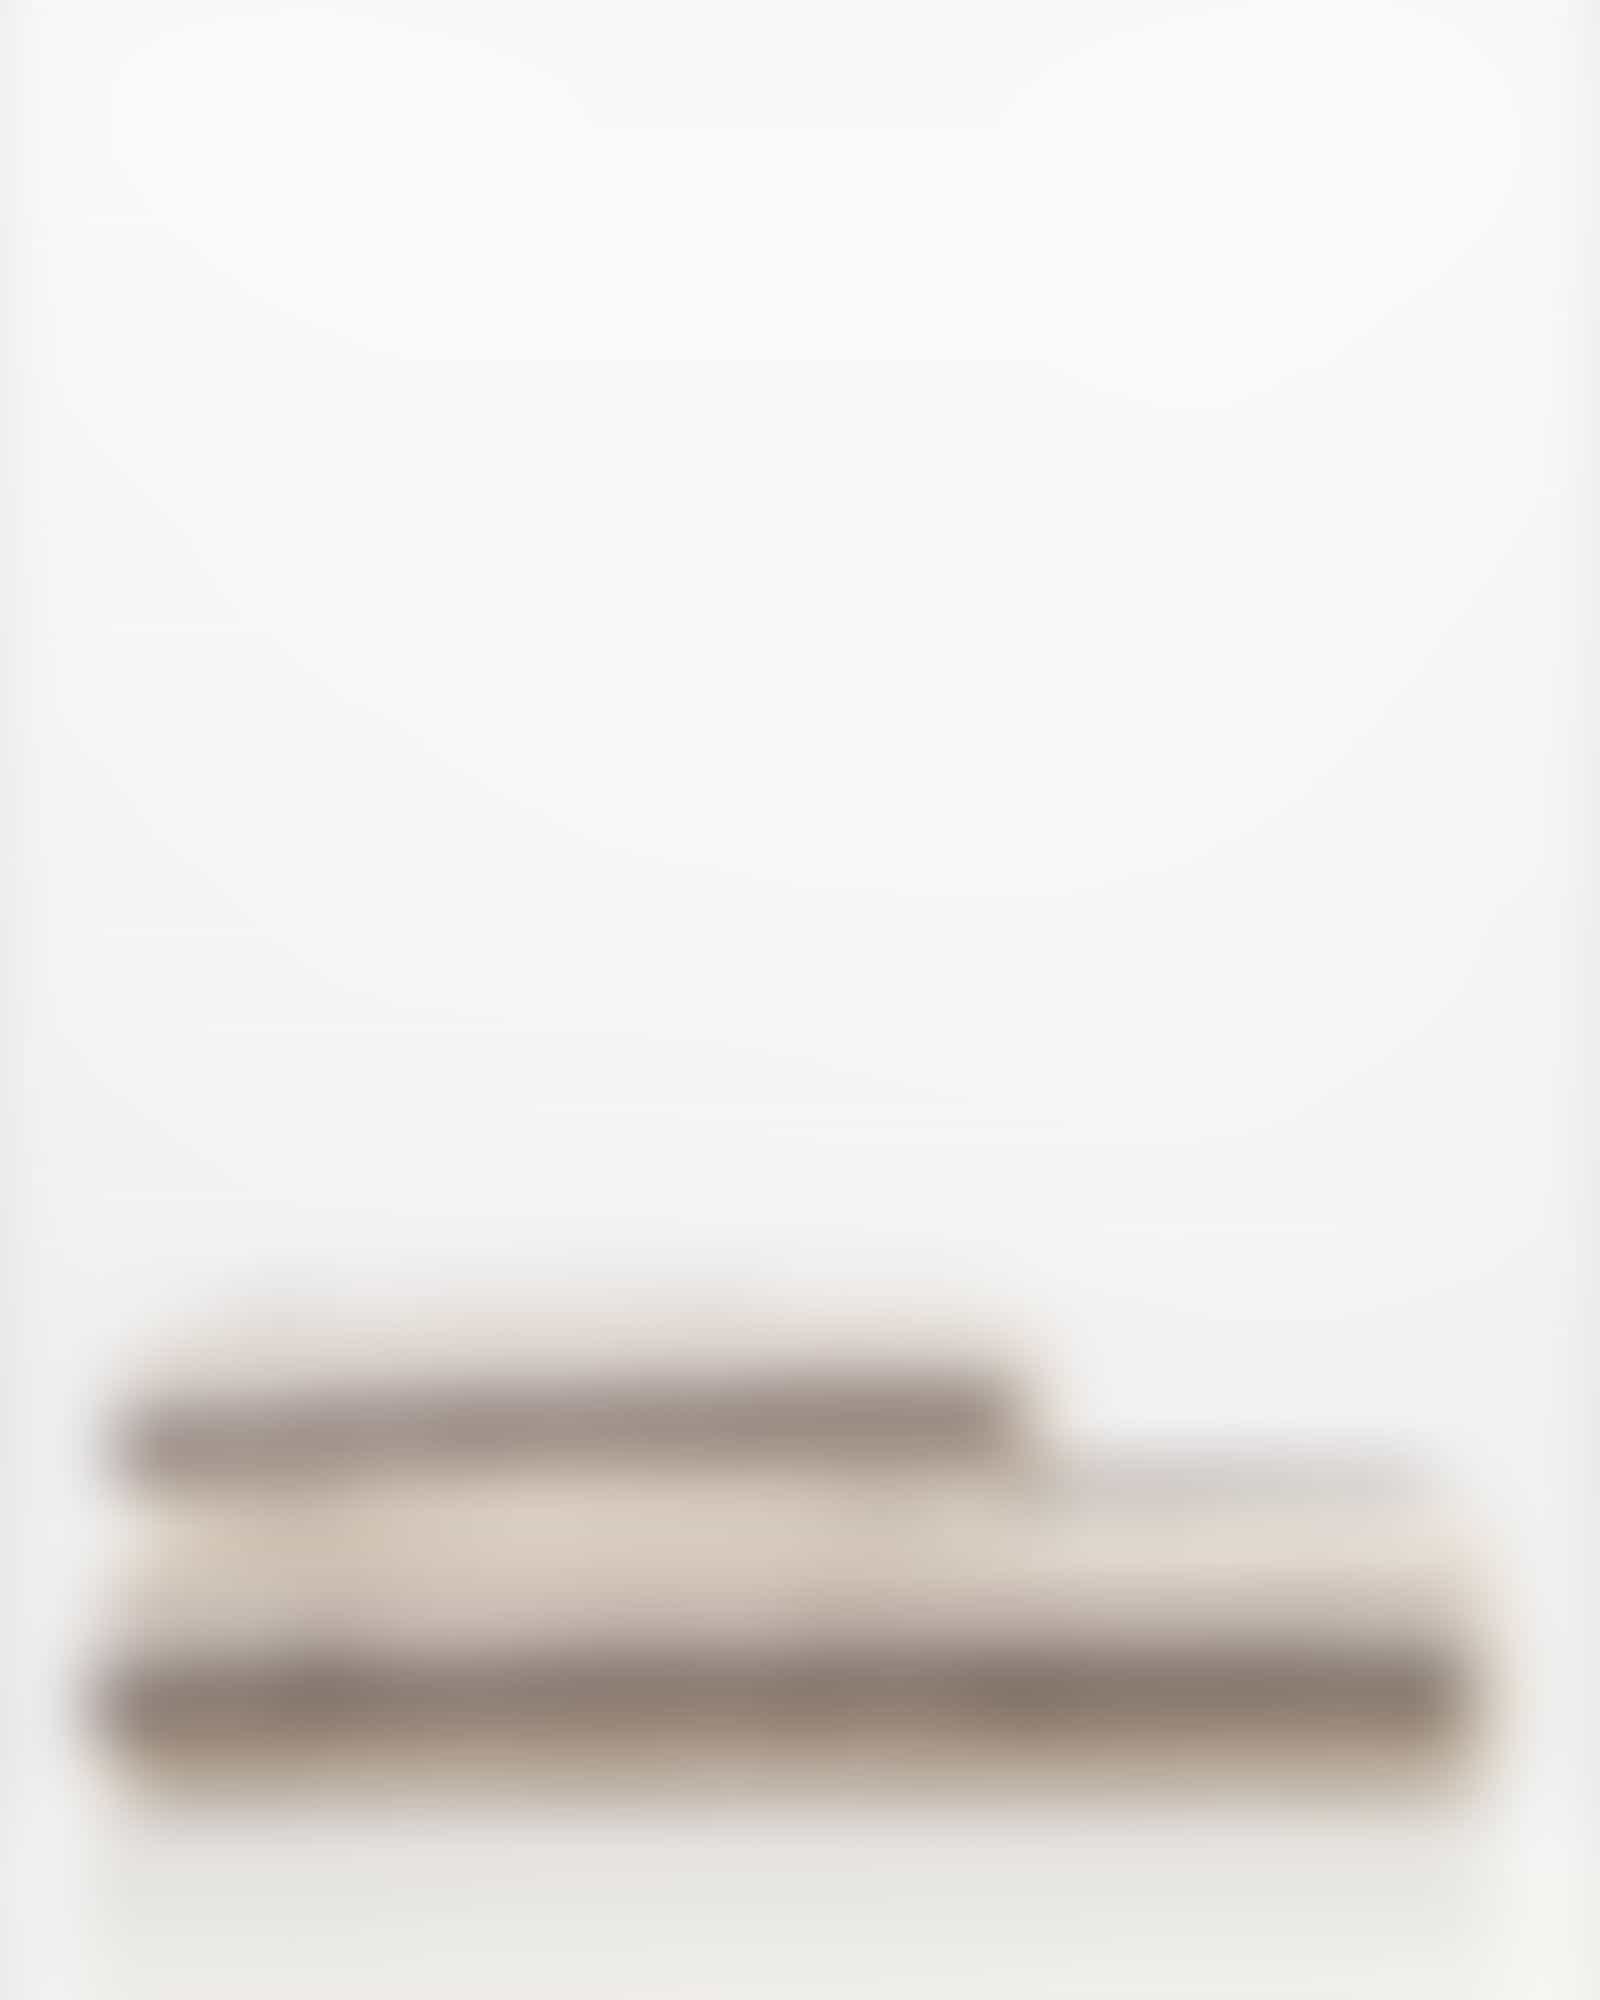 JOOP Move Stripes 1692 - Farbe: sand - 37 - Handtuch 50x100 cm Detailbild 3